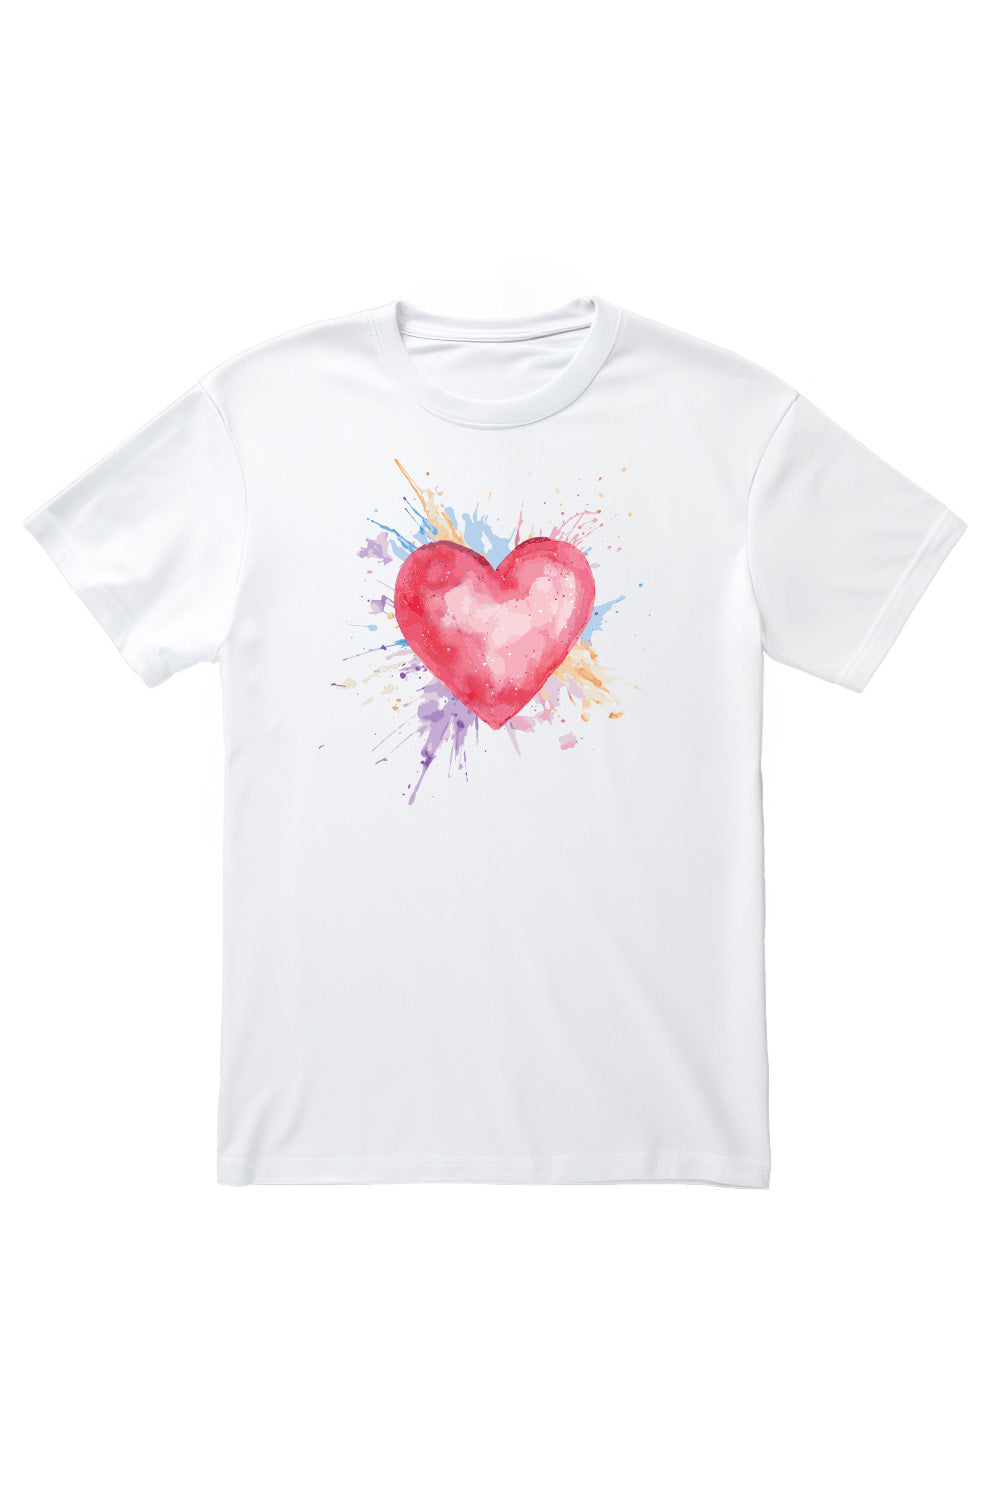 Heart With Pastel Splash T-Shirt